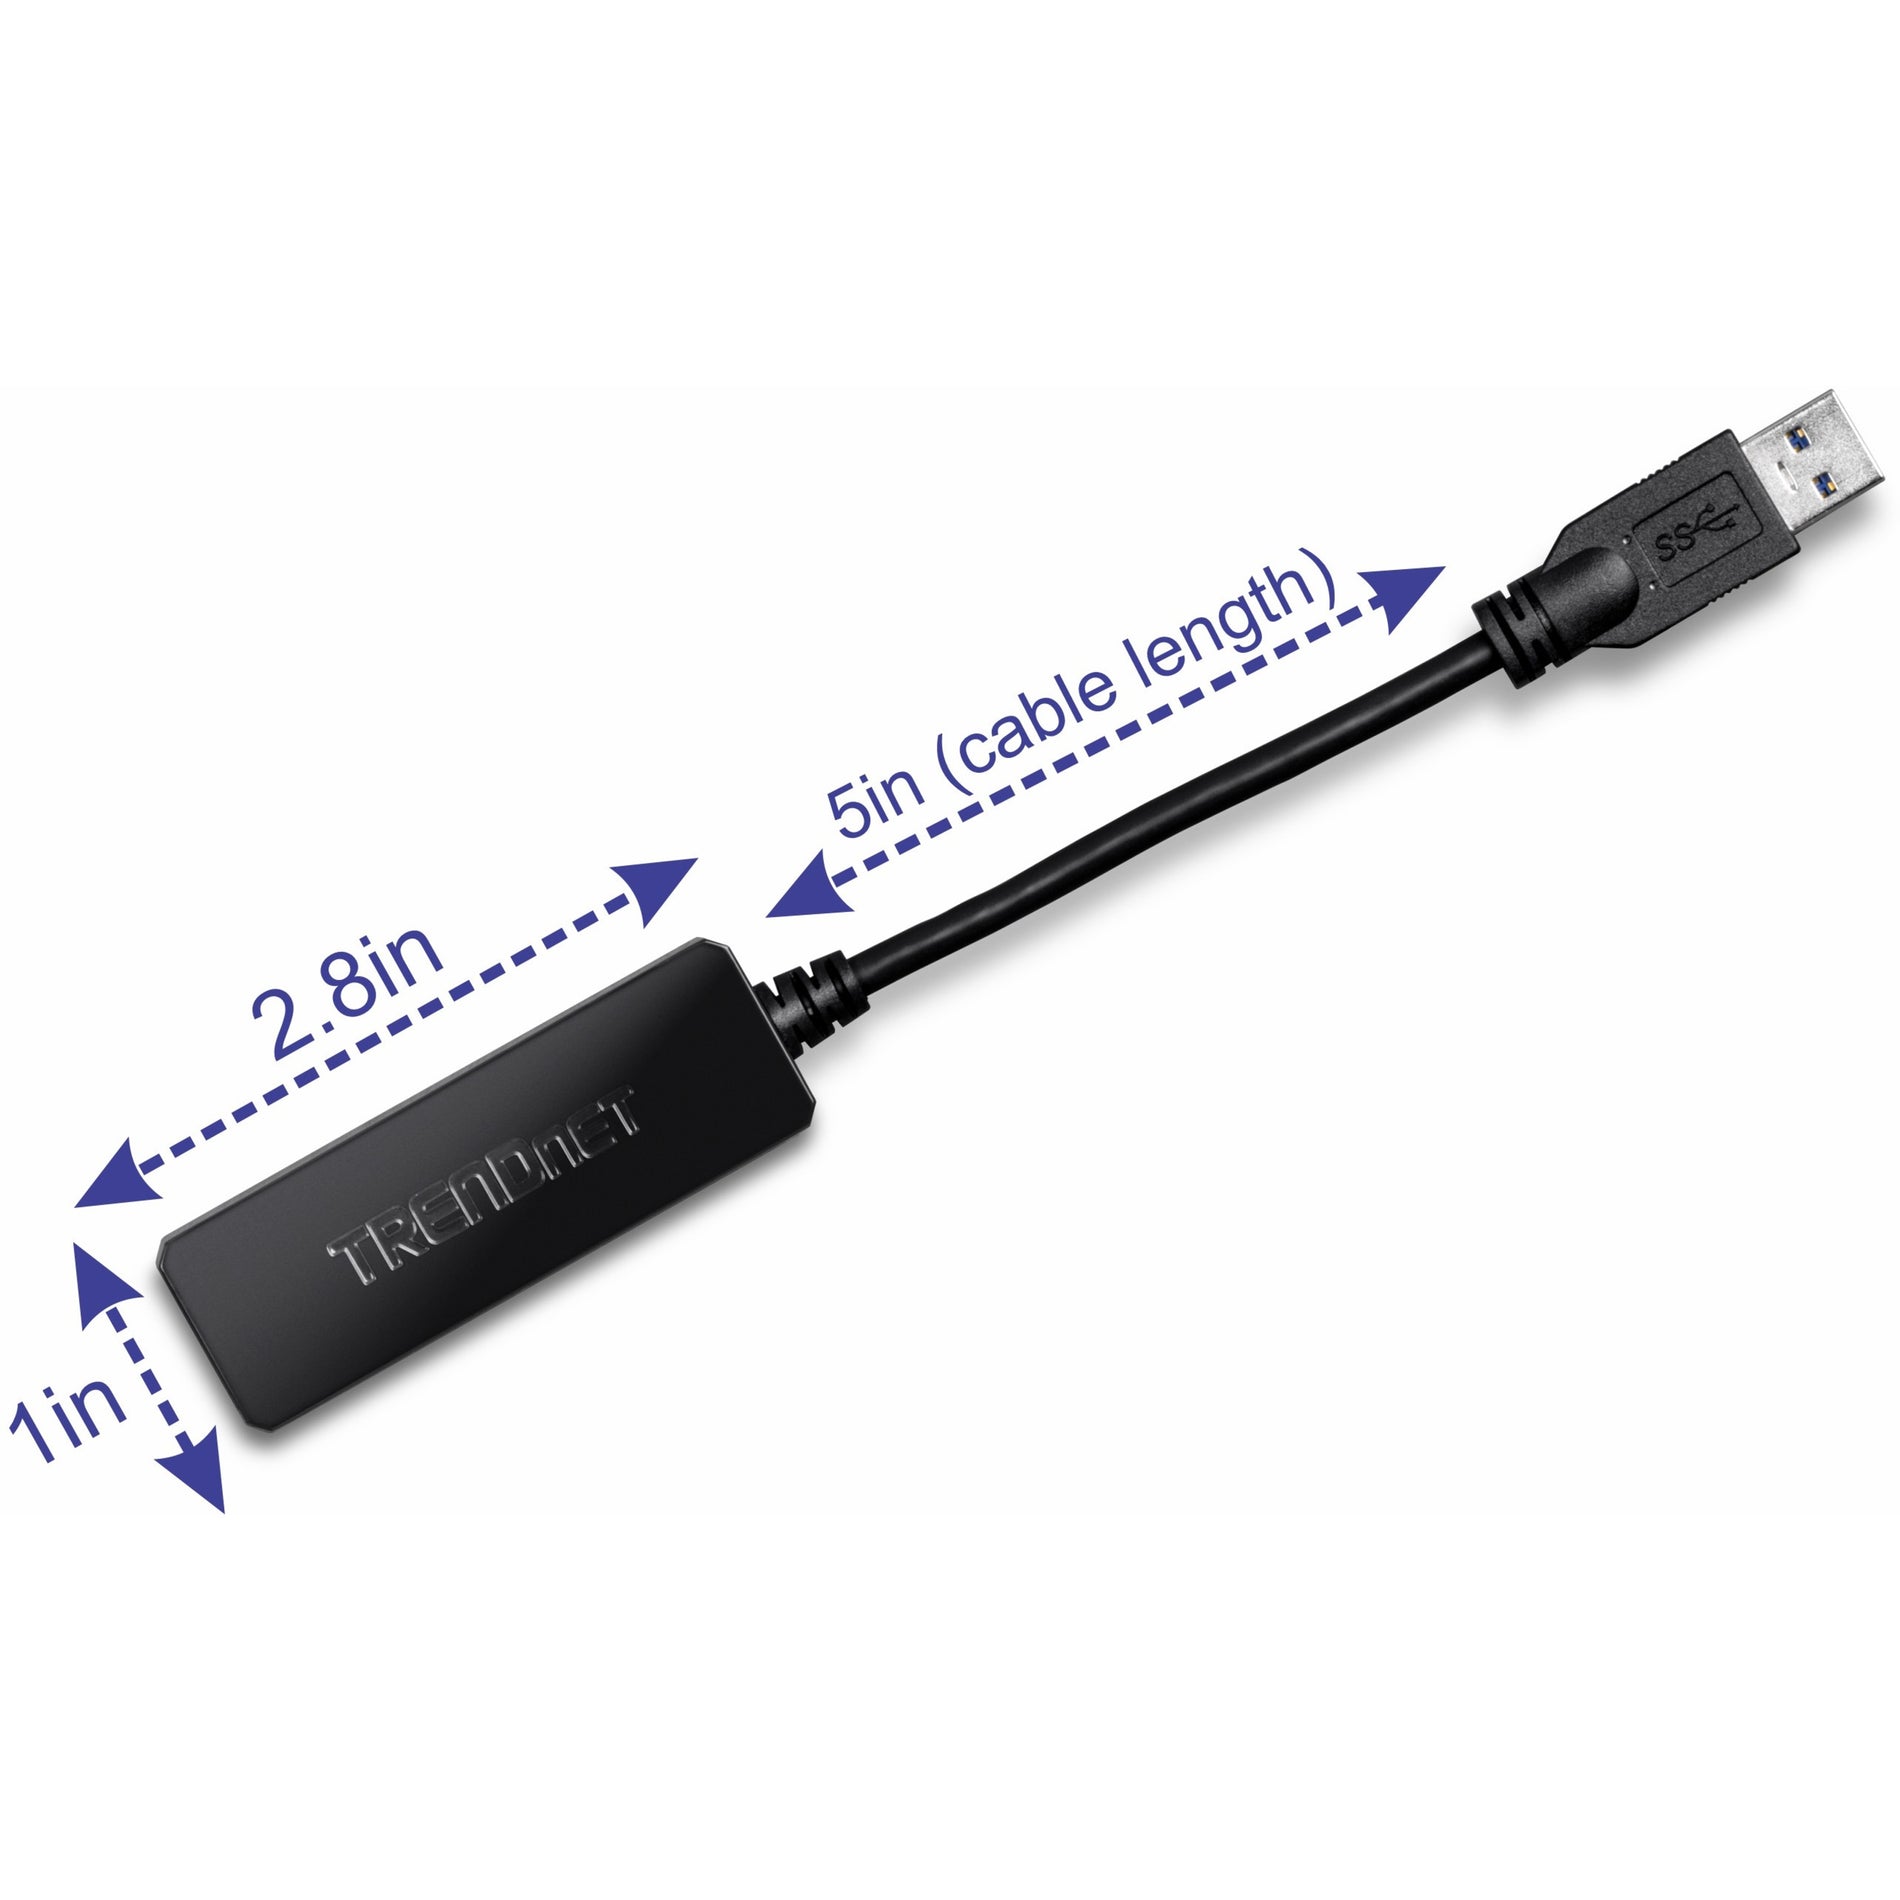 TRENDnet TU3-ETG USB 3.0 to Gigabit Ethernet Adapter, 2 Year Warranty, Mac/PC Compatible